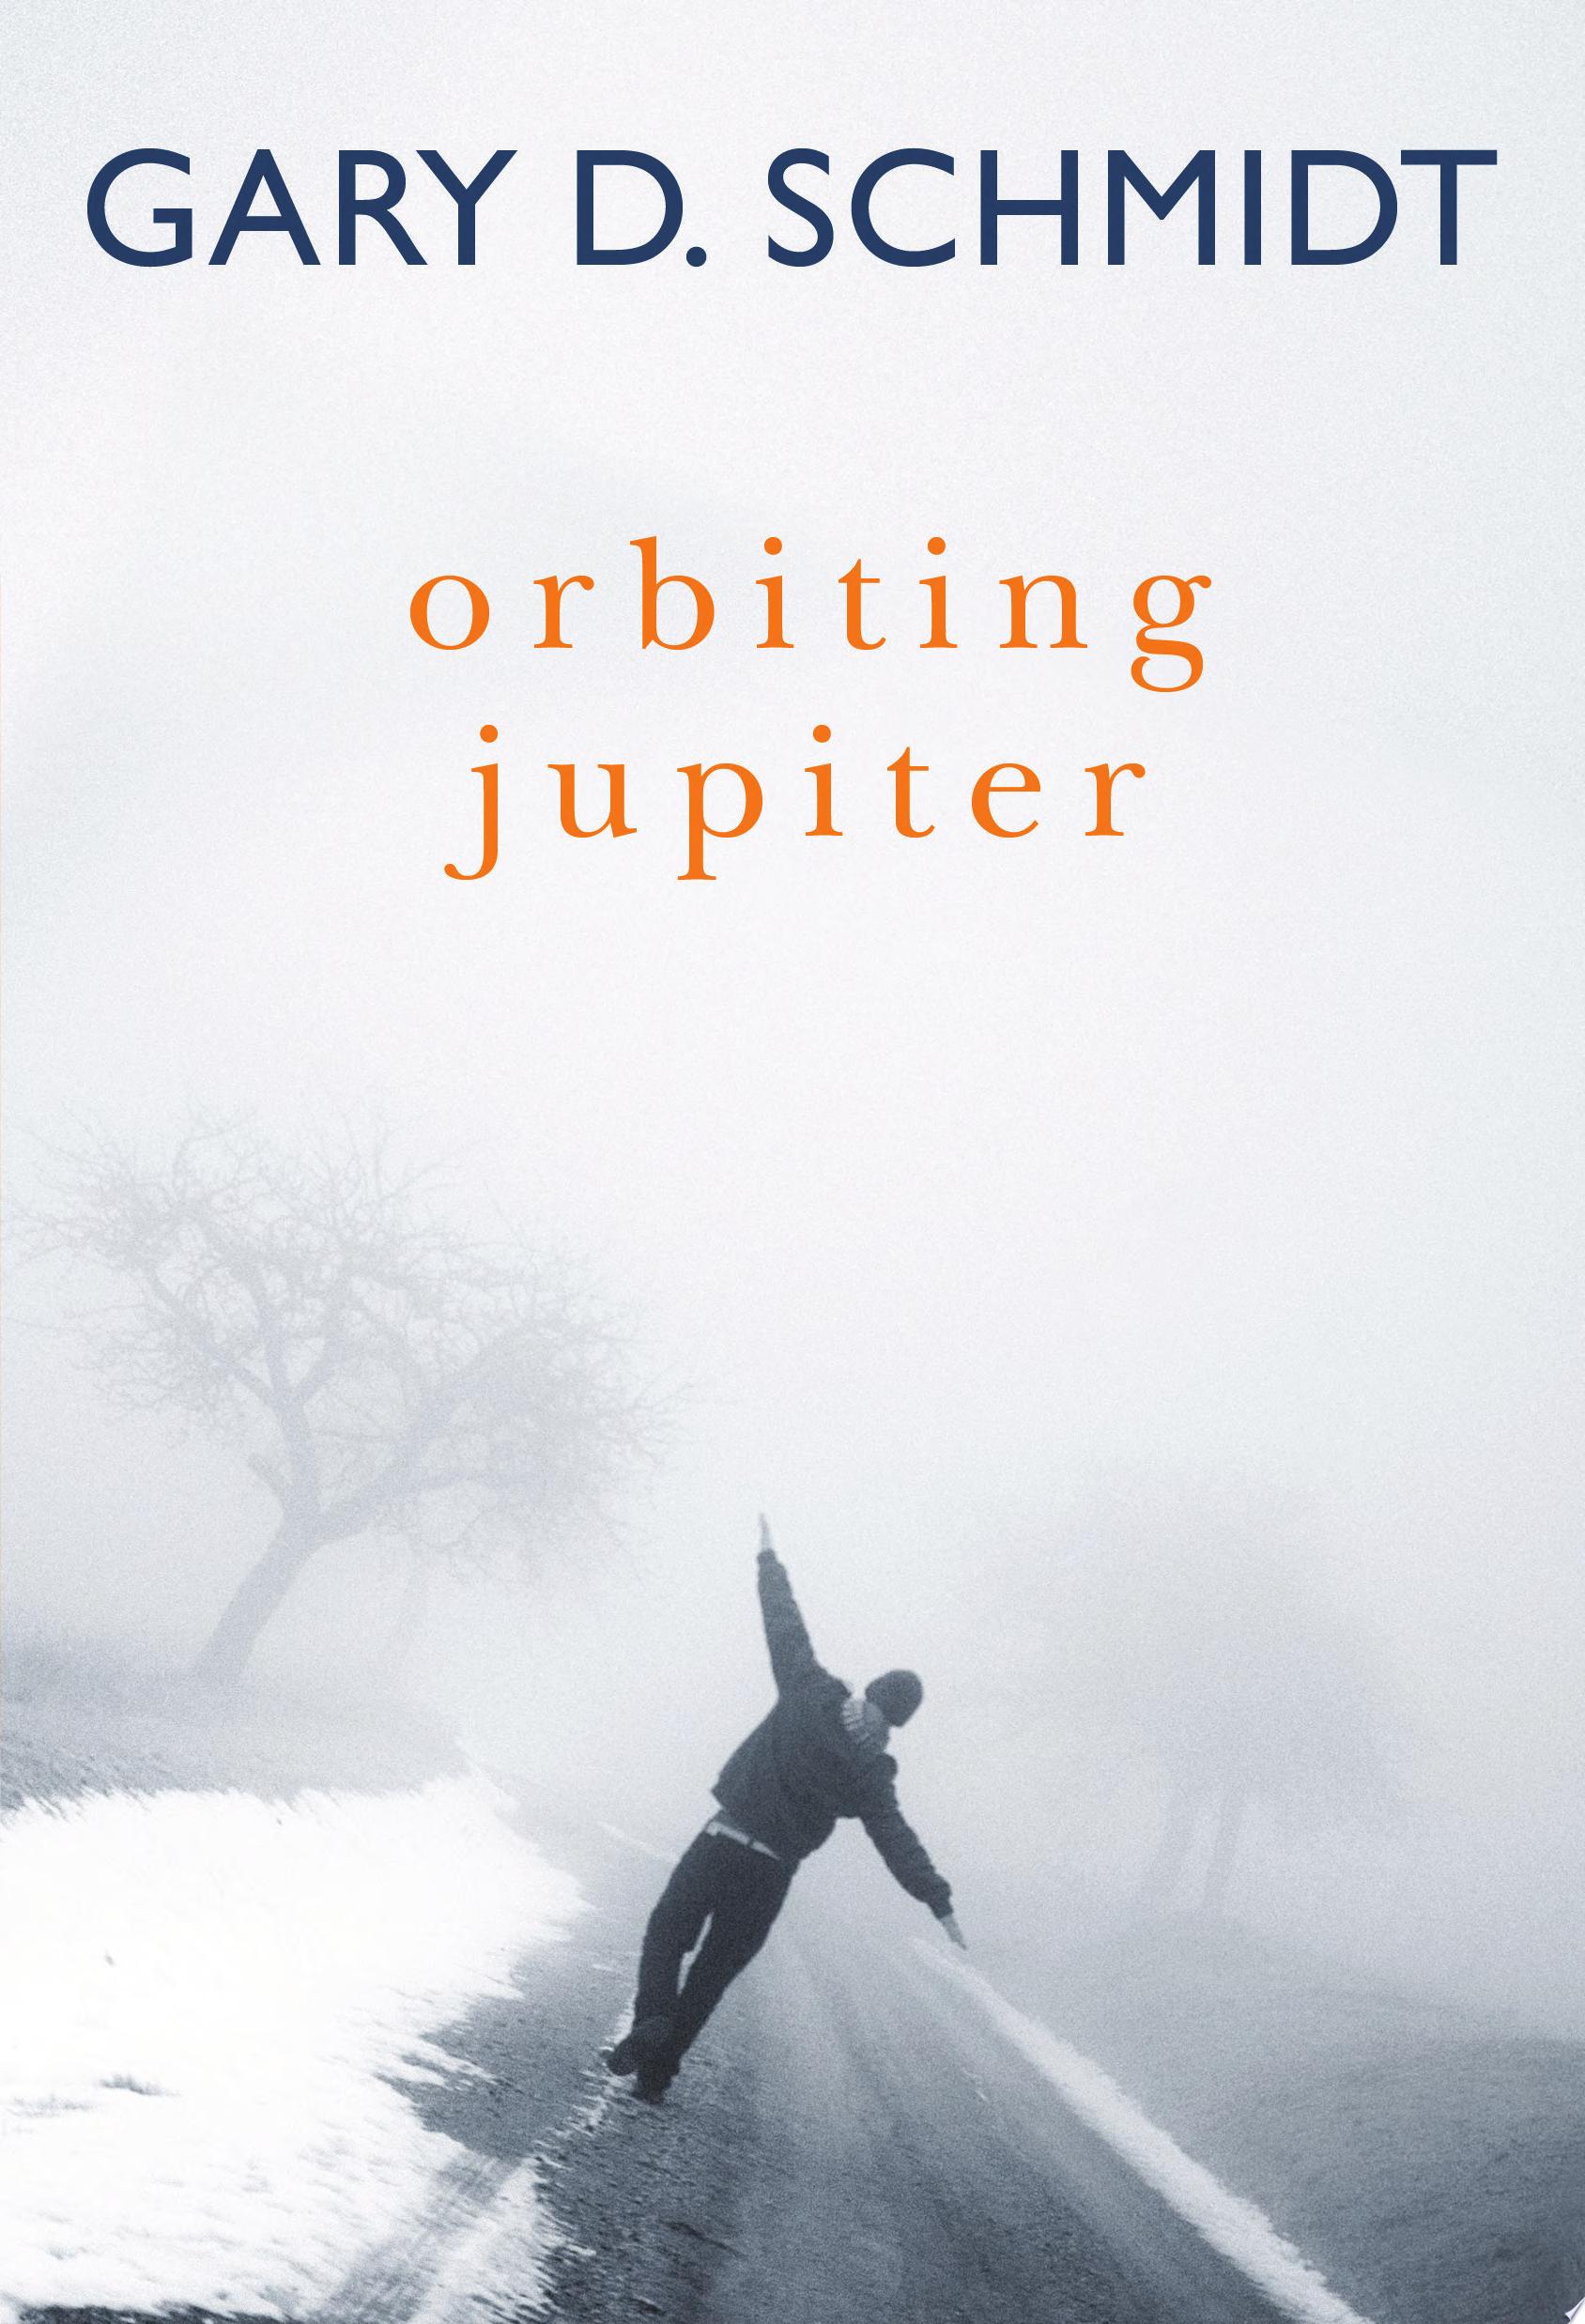 Image for "Orbiting Jupiter"